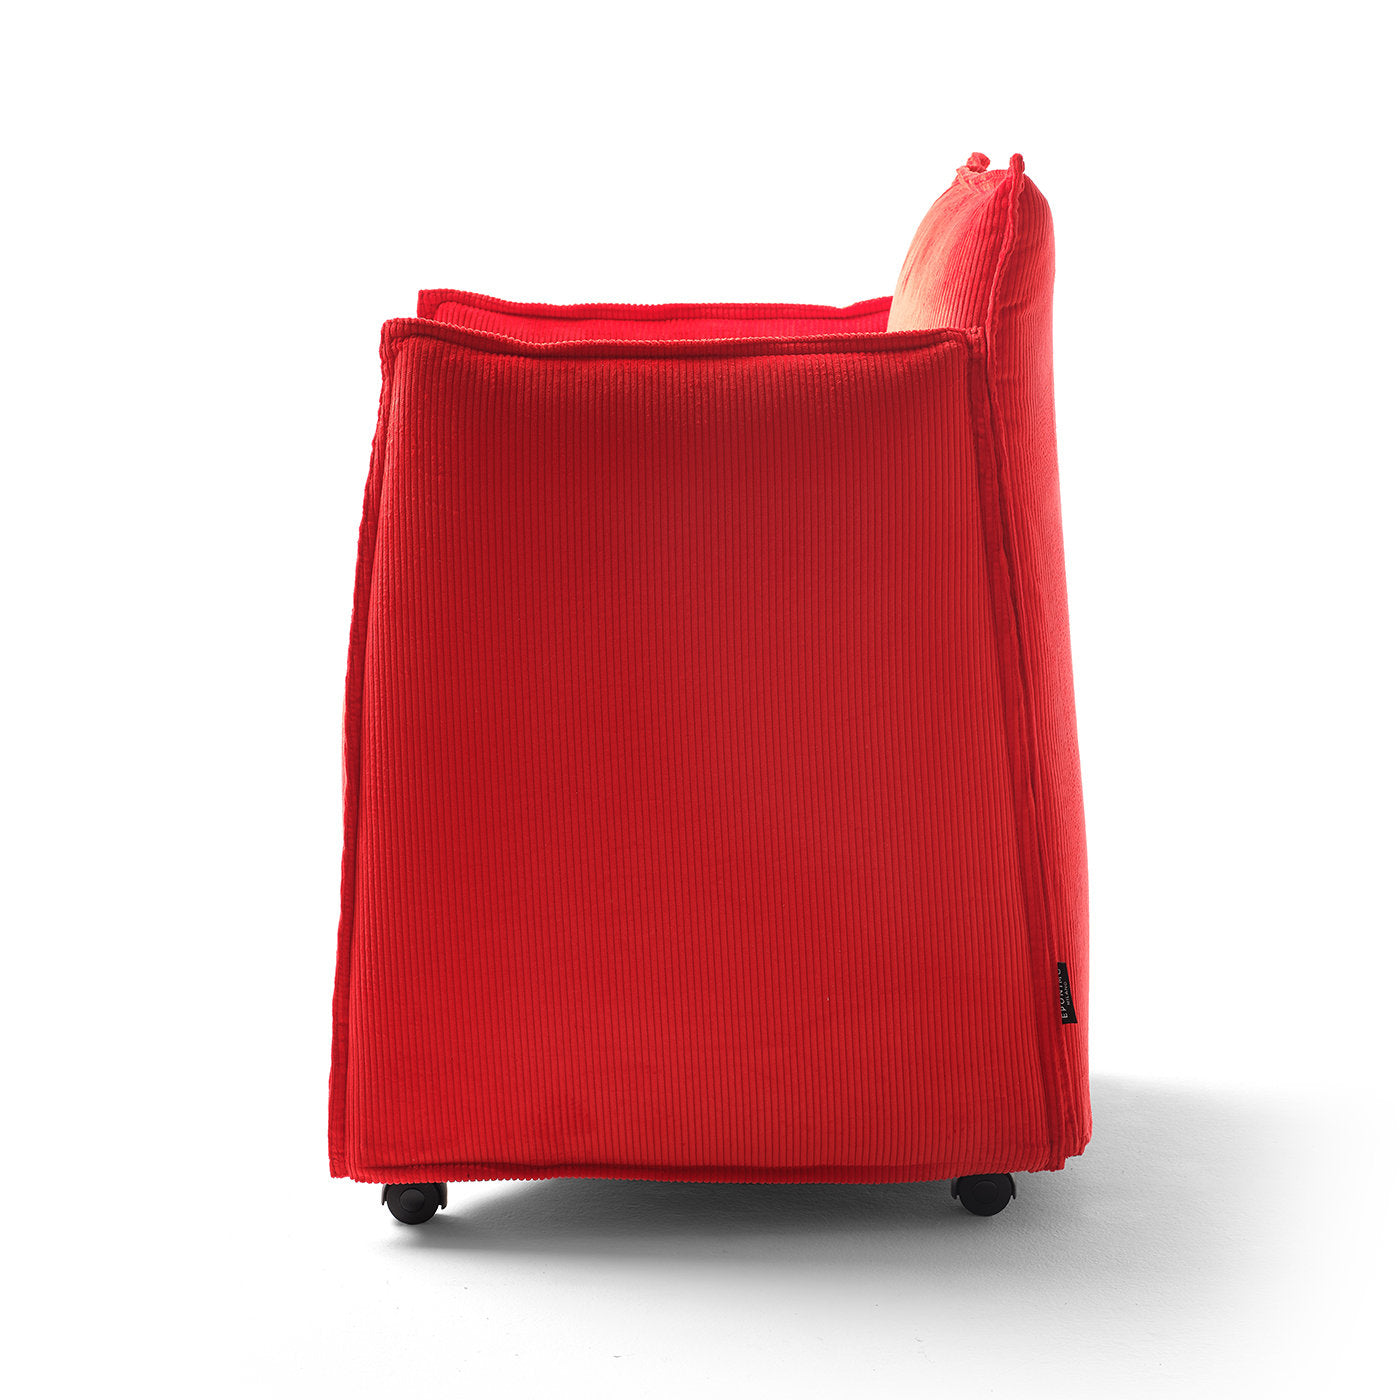 Medven Red Armchair by Alberto Colzani - Alternative view 1